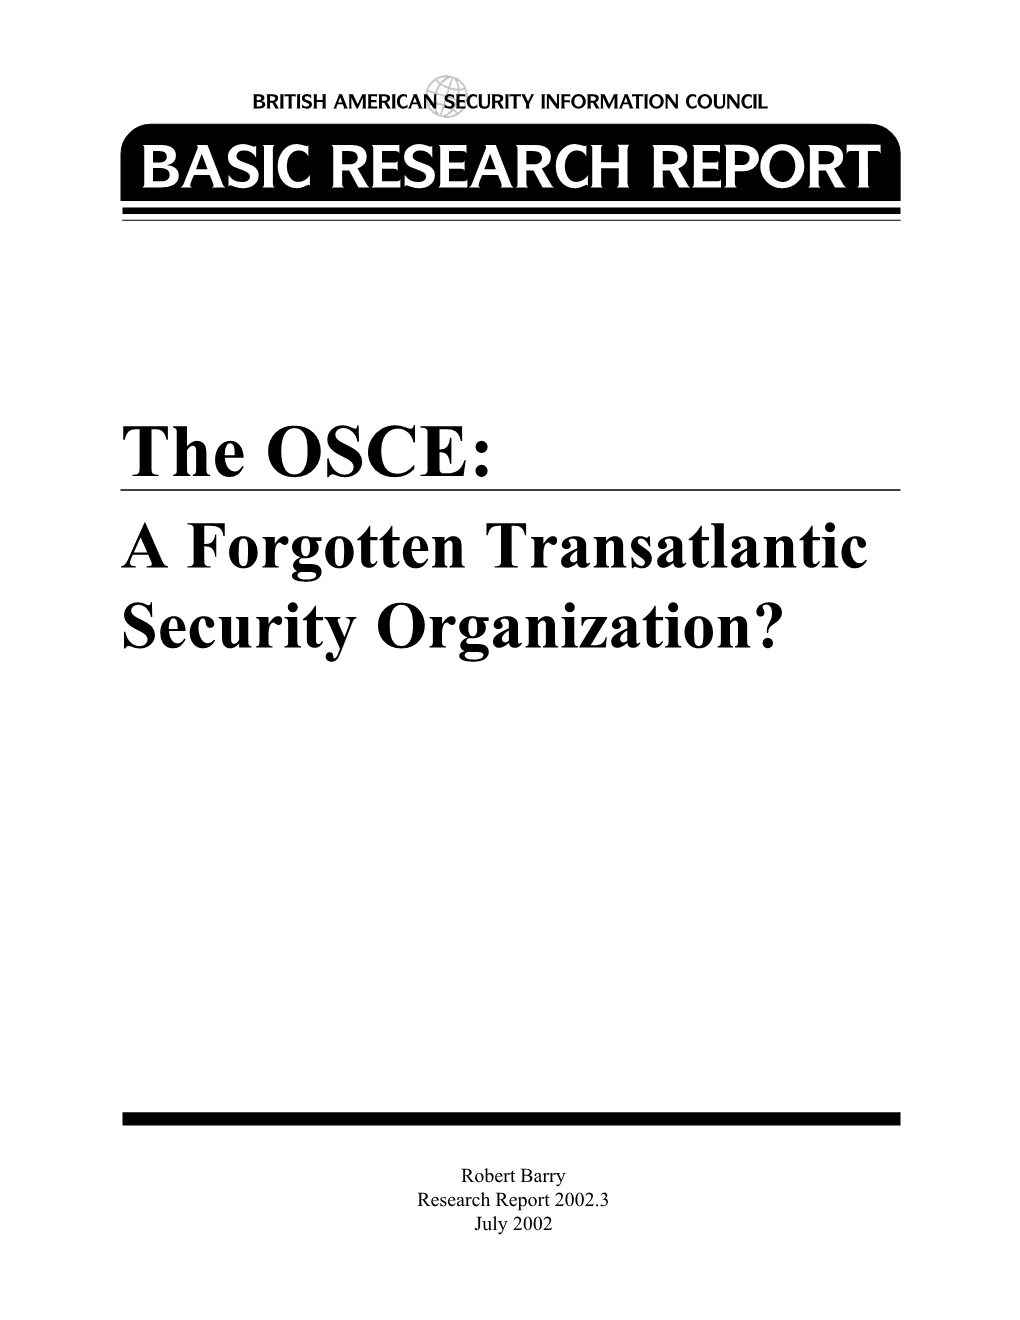 The OSCE: a Forgotten Transatlantic Security Organization?